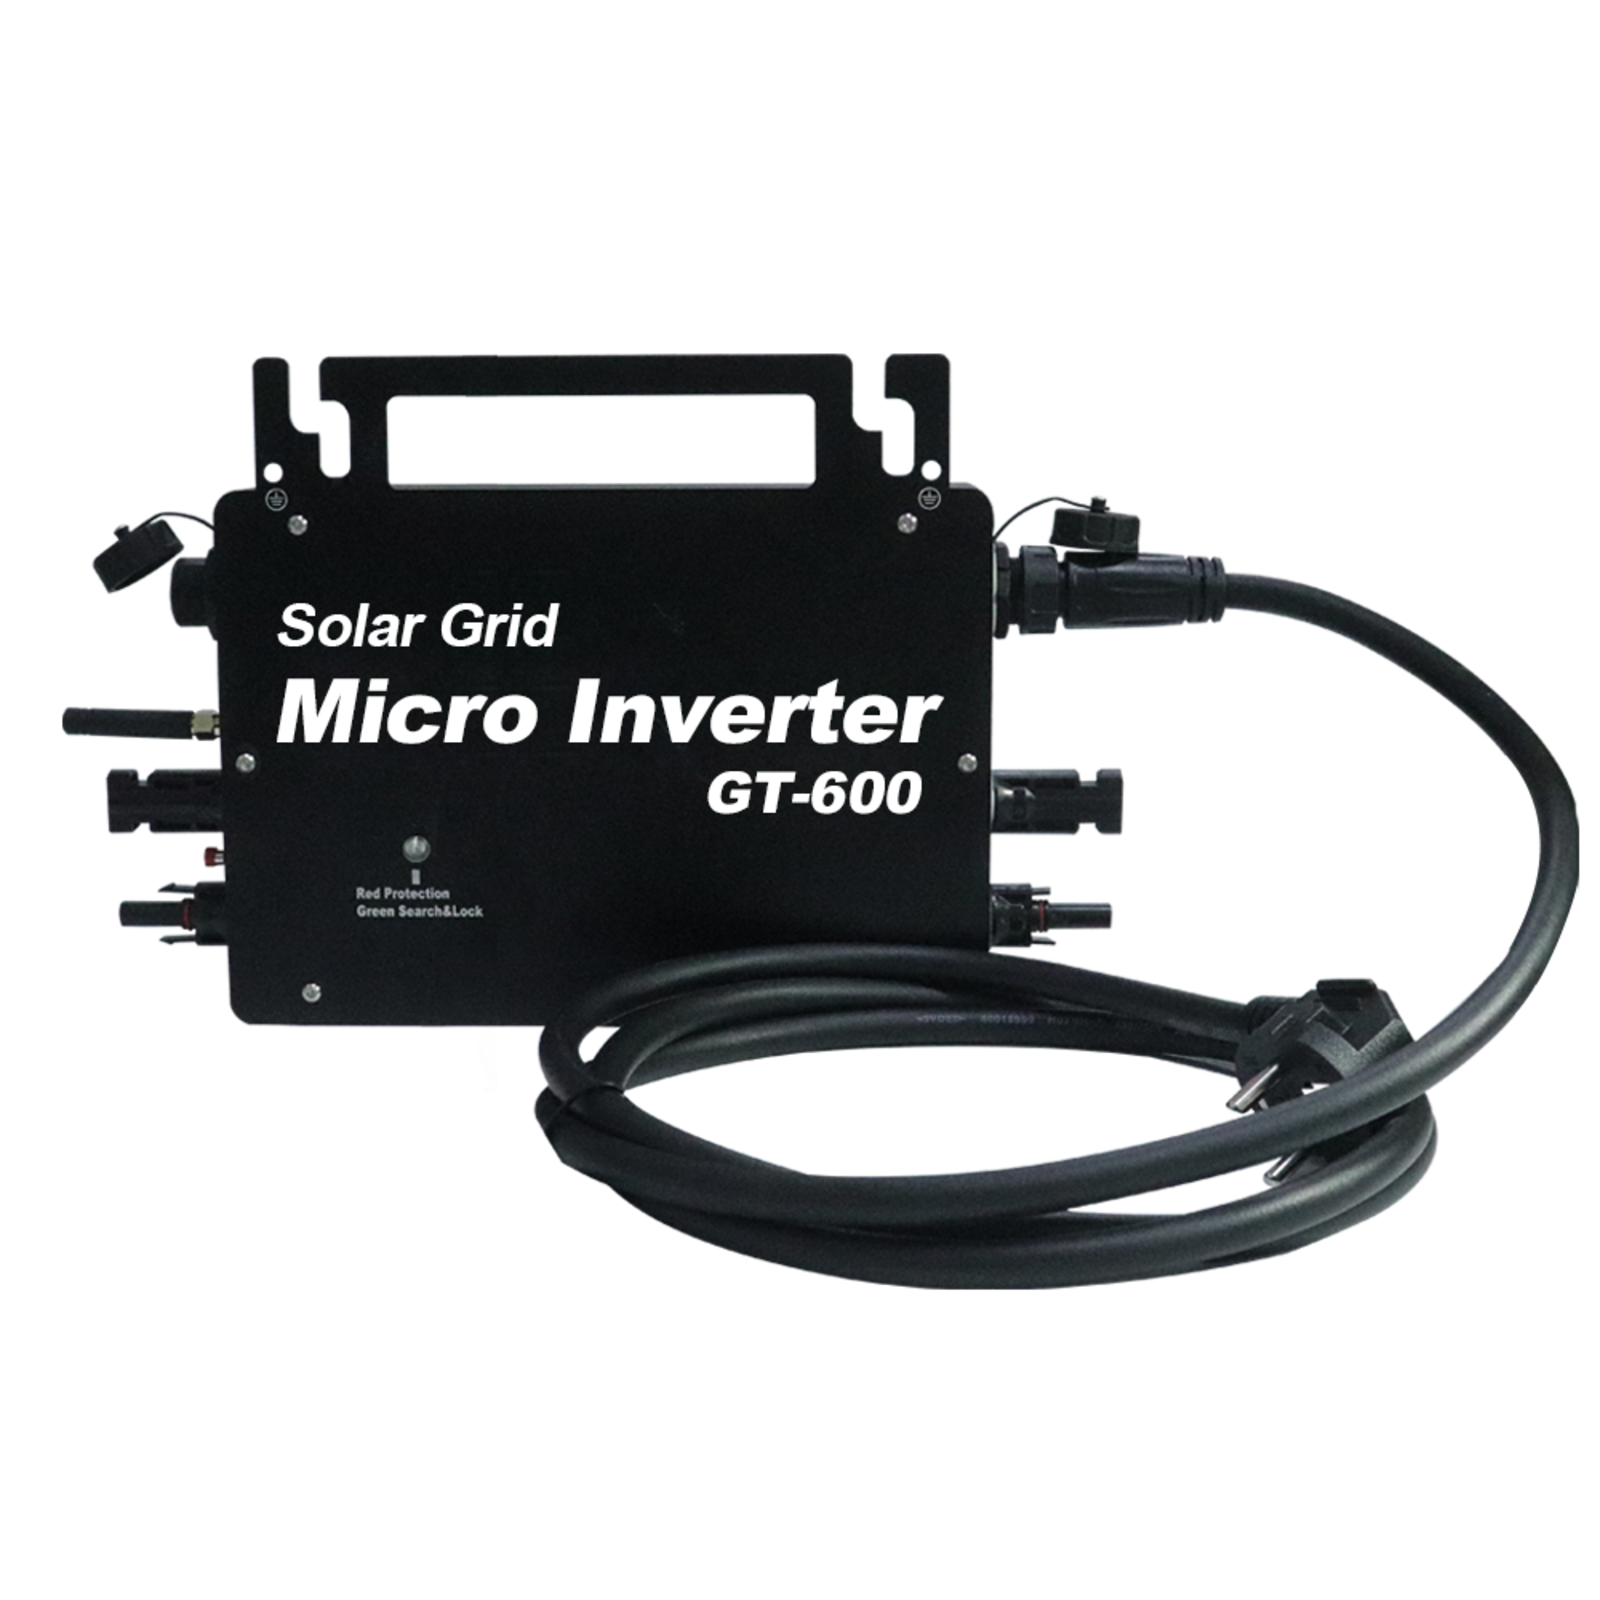 600W 220V Solar Grid VDE Micro Inverter – PowMr